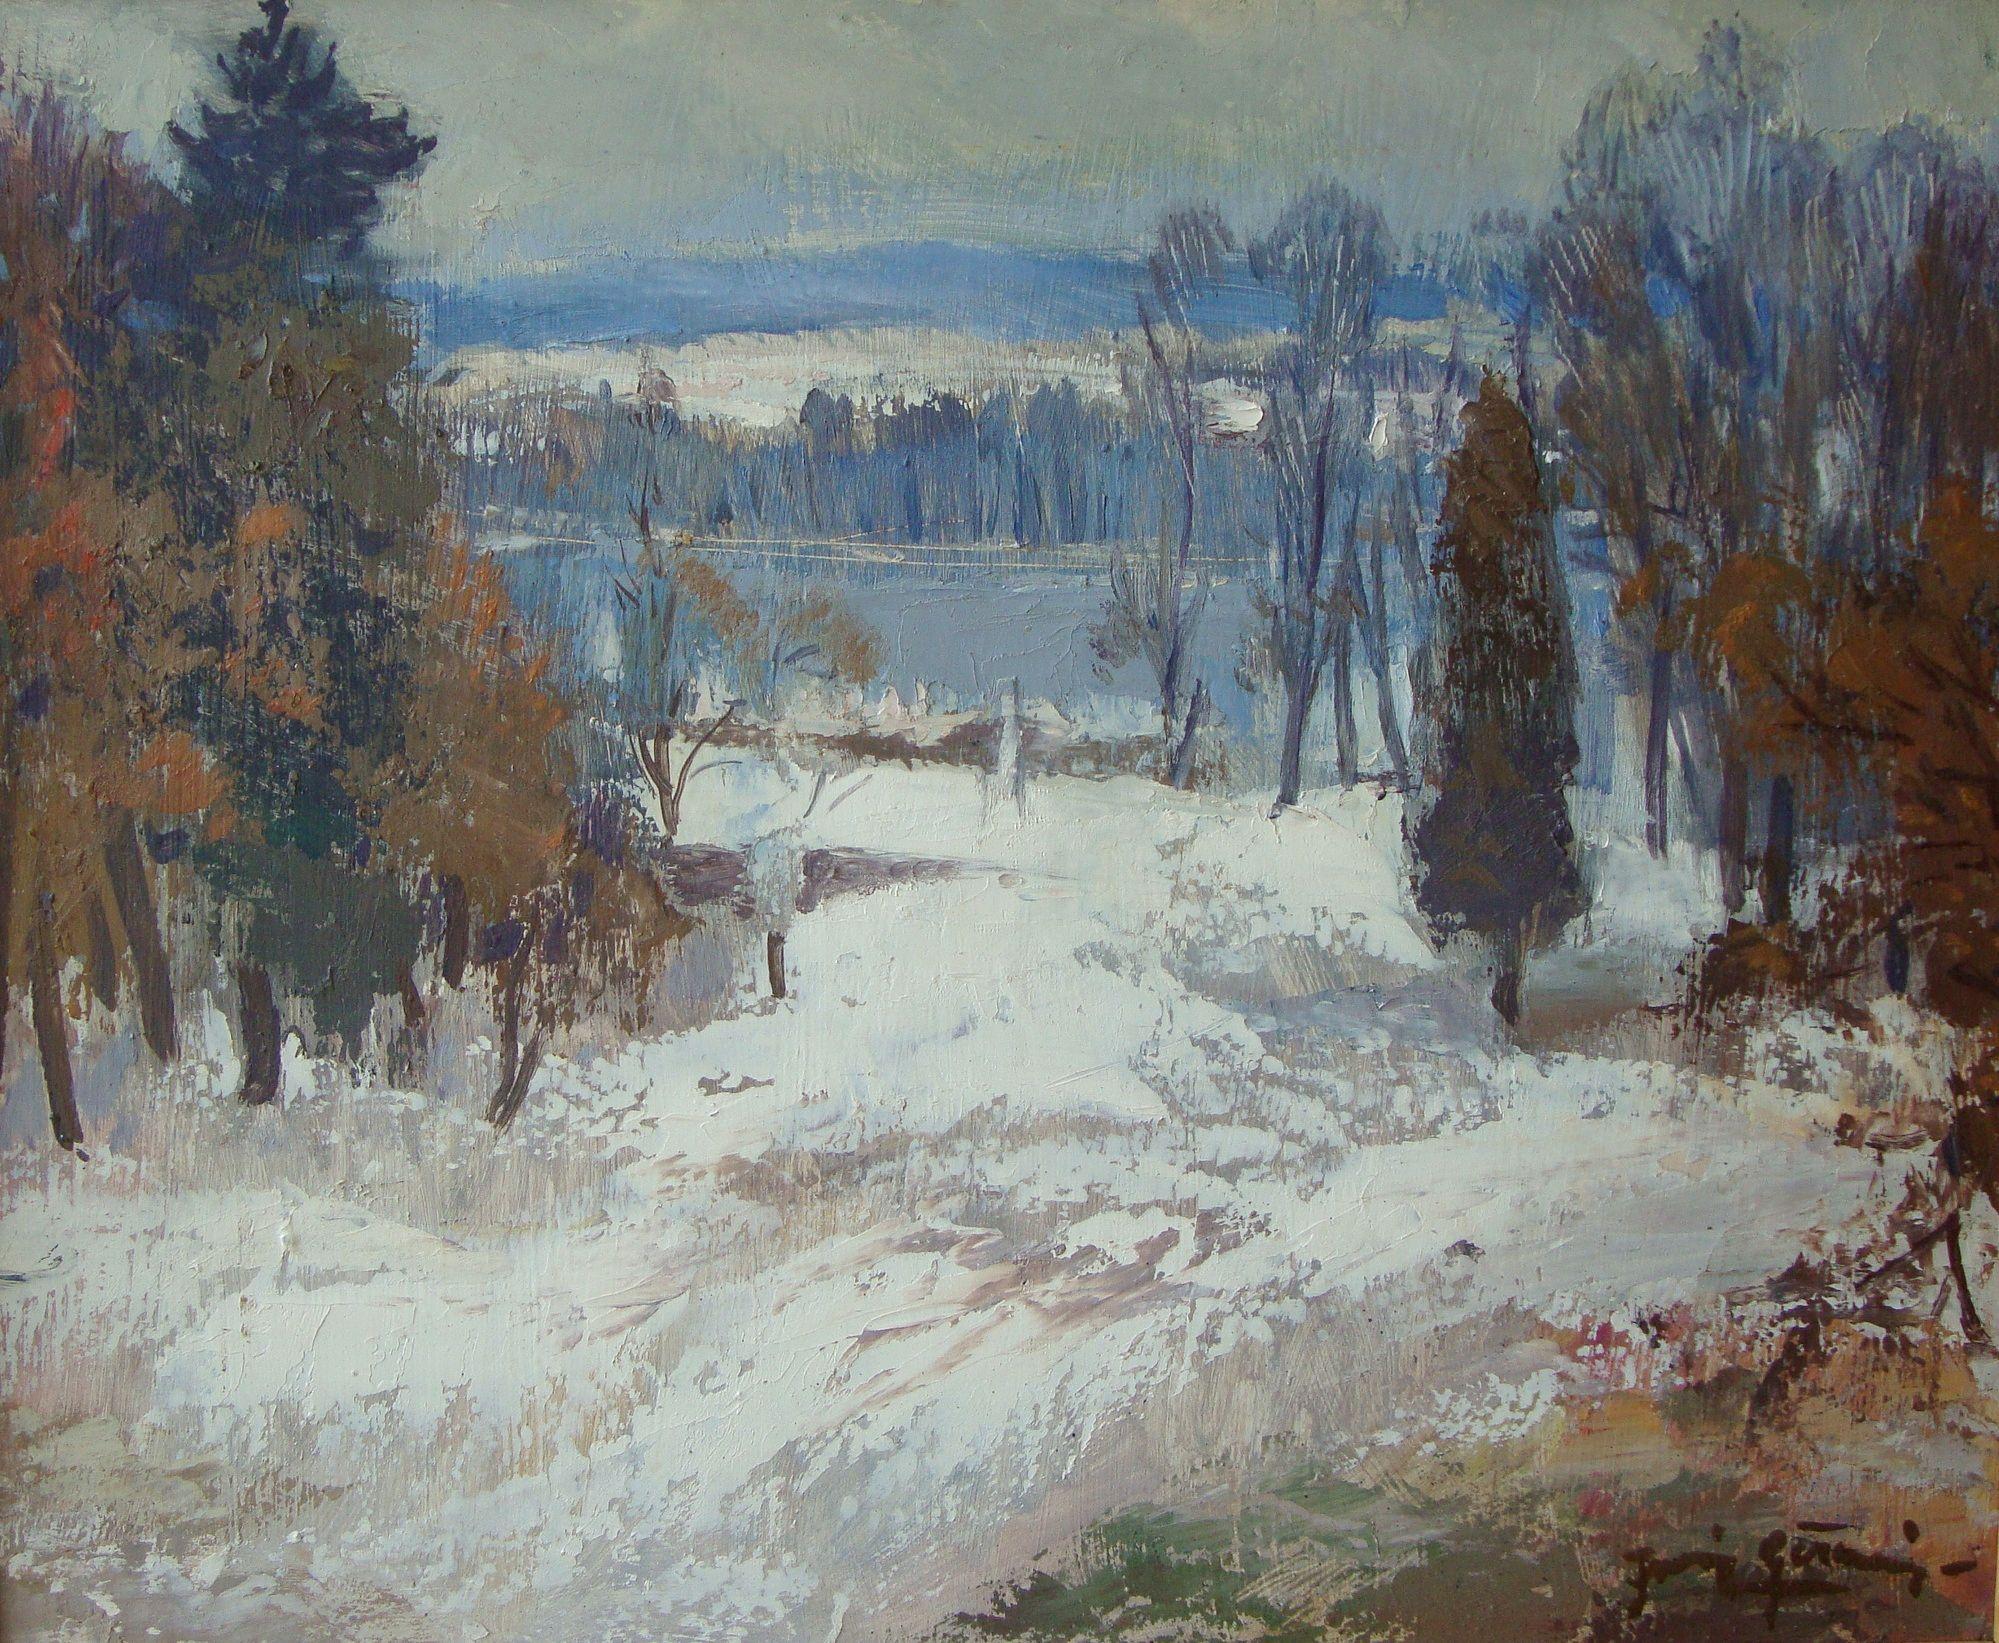 Juris Germanis Landscape Painting - Winter landscape. 2002, oil on cardboard, 59, 5x72 cm